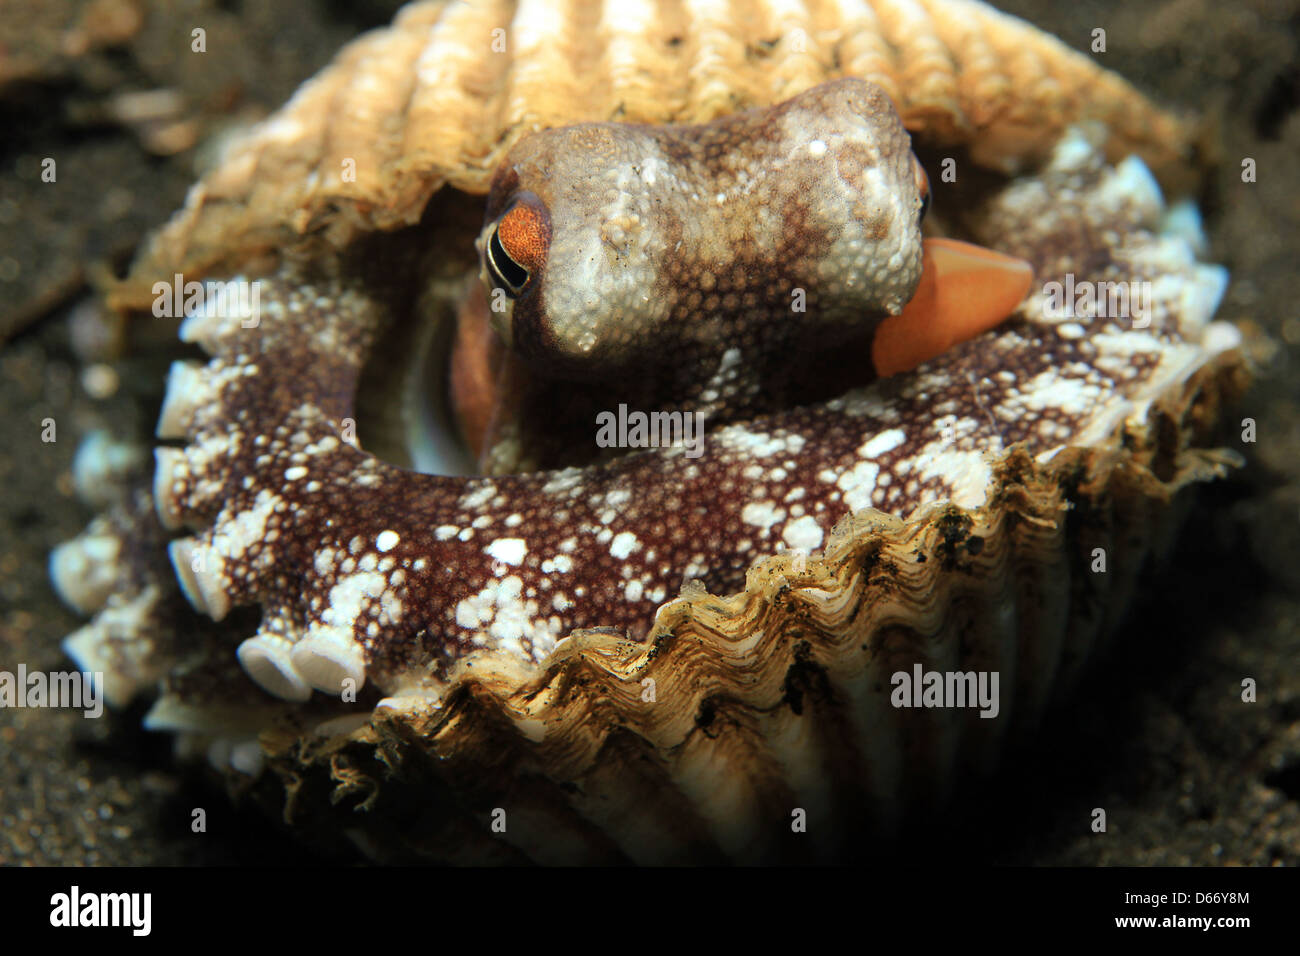 Coconut Octopus (Amphioctopus Marginatus) taking Shelter between Seashells, Lembeh Strait, Indonesia Stock Photo